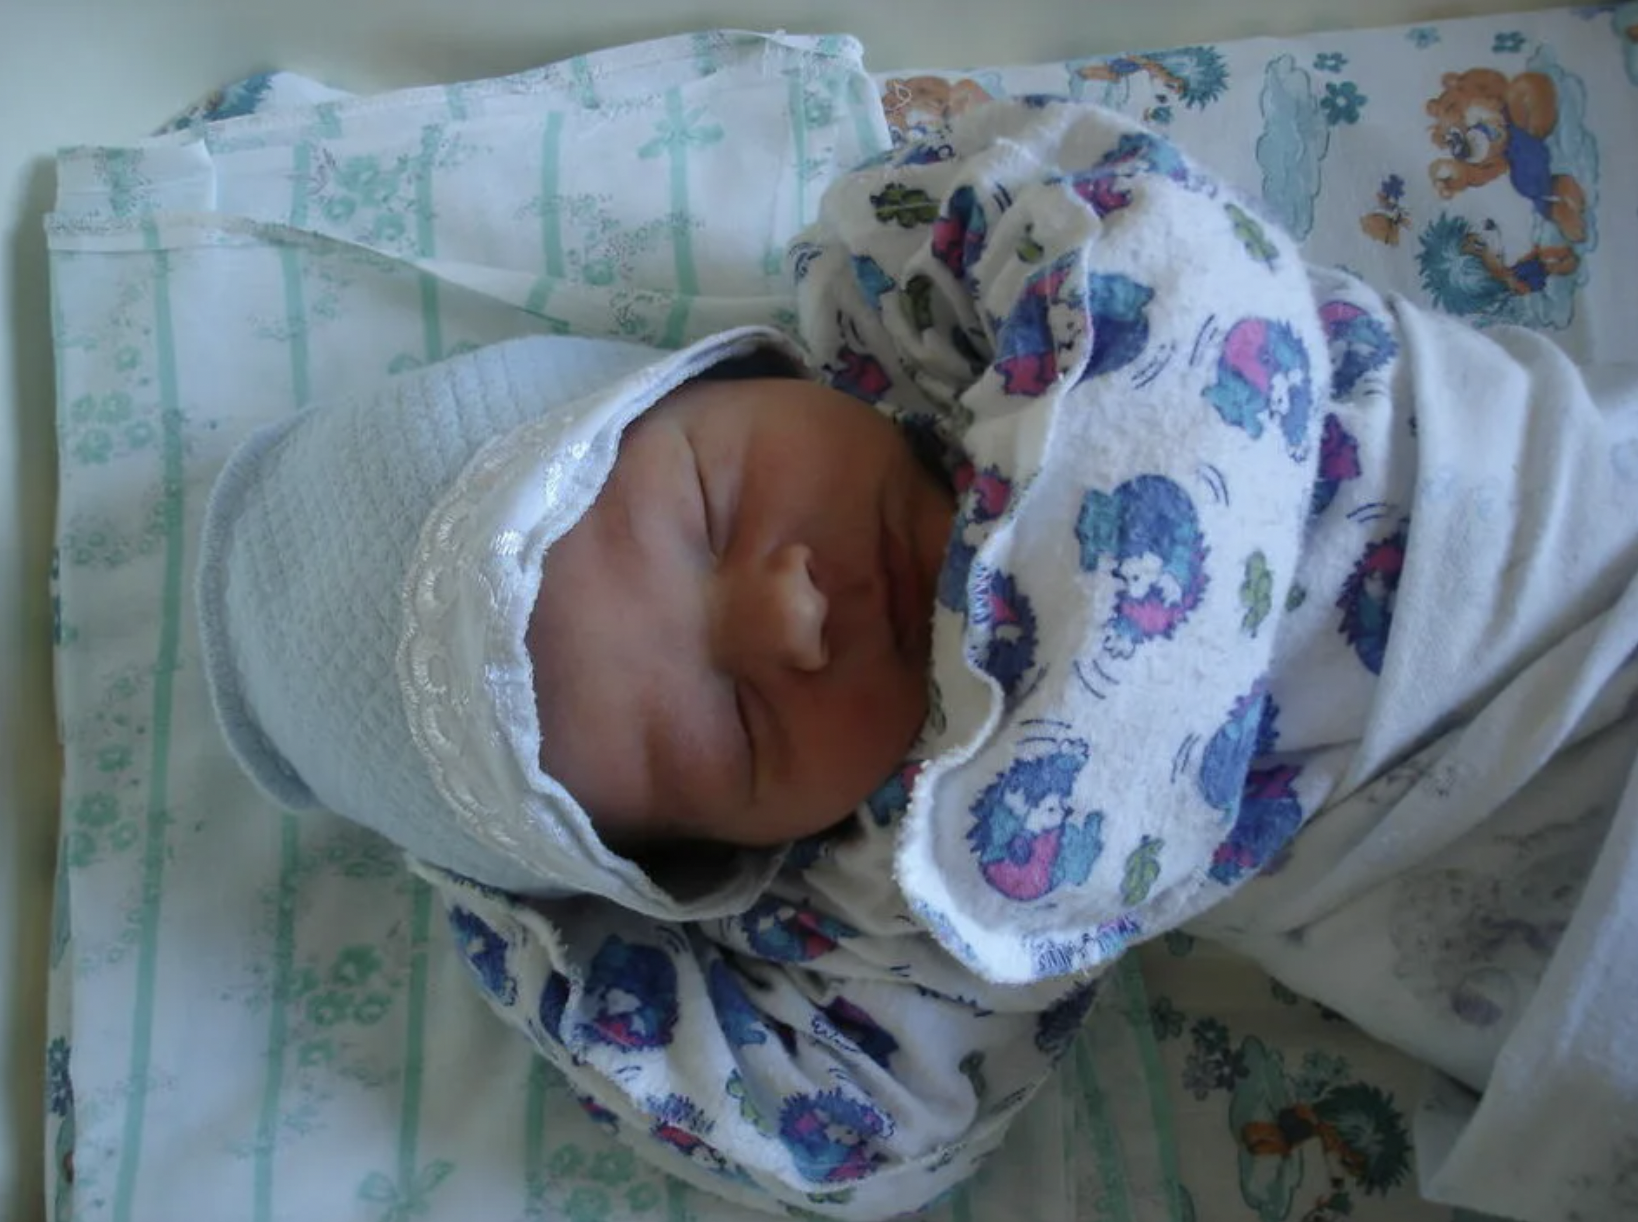 Newborn boy | Source: Shutterstock